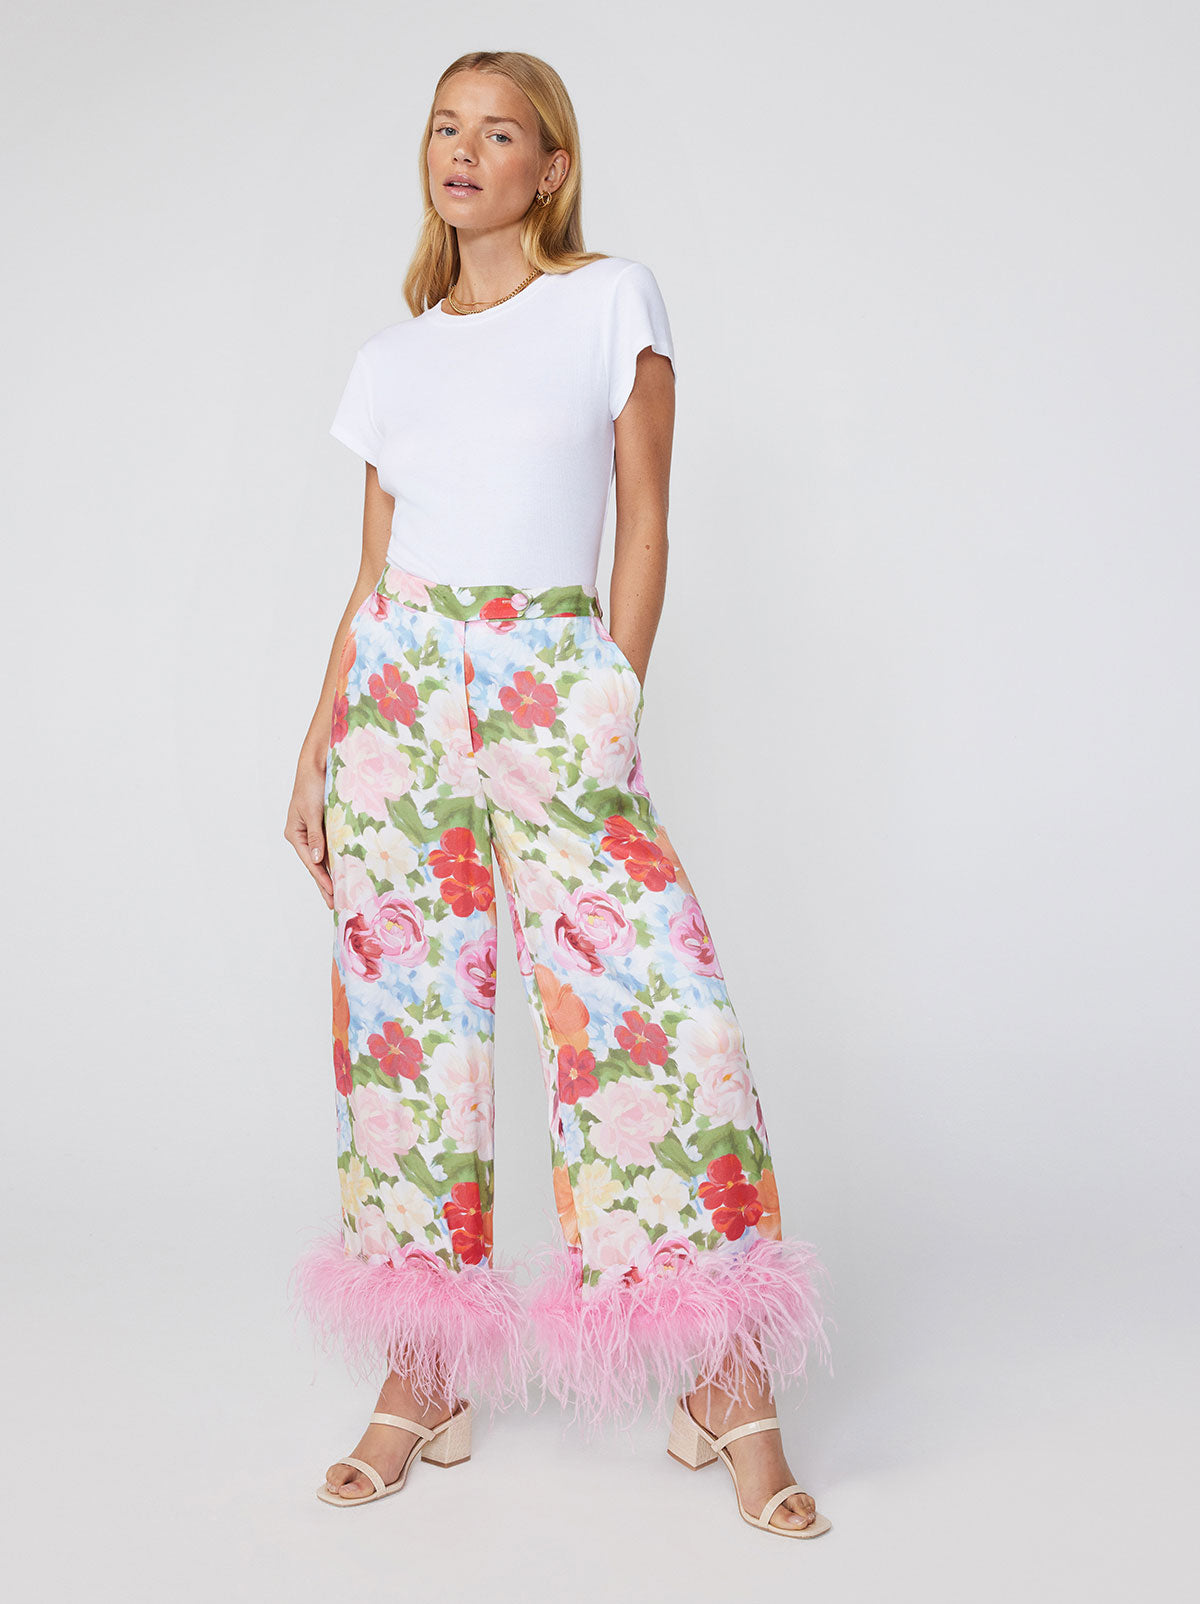 ADAGRO Womens Clothing Sets Floral Print Crop Top & Wide Leg Pants